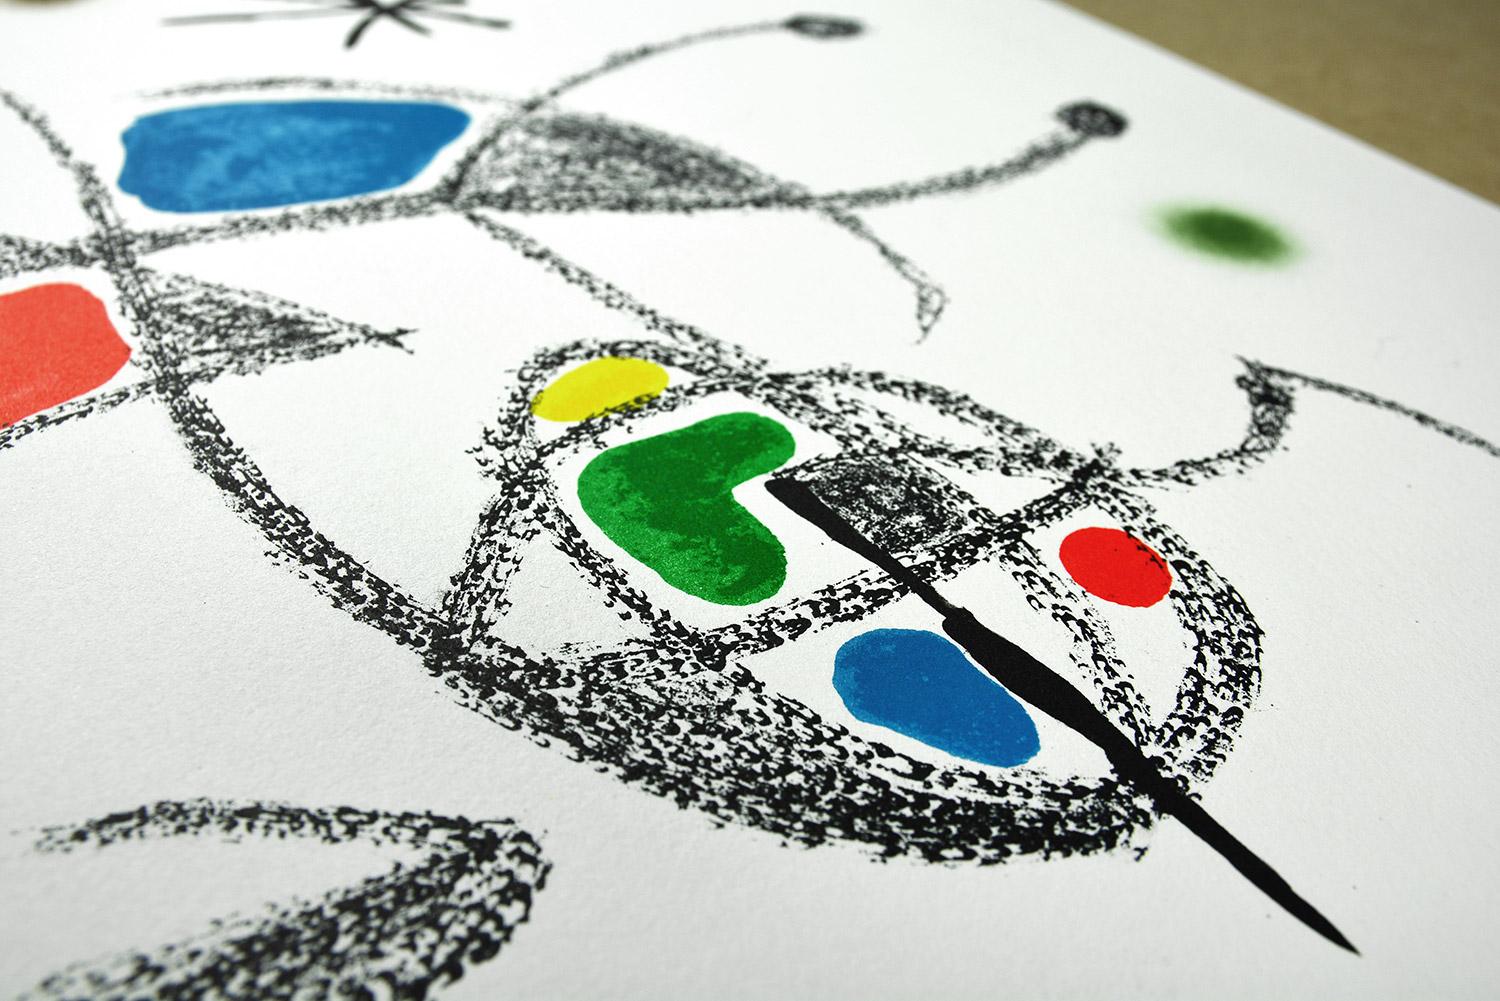 Joan Miró - Maravillas con variaciones acrósticas en el jardín de Miró VIII
Date of creation: 1975
Medium: Lithograph on Gvarro paper
Edition: 1500
Size: 49,5 x 35,5 cm
Condition: In very good conditions and never framed
Observations: Lithograph on